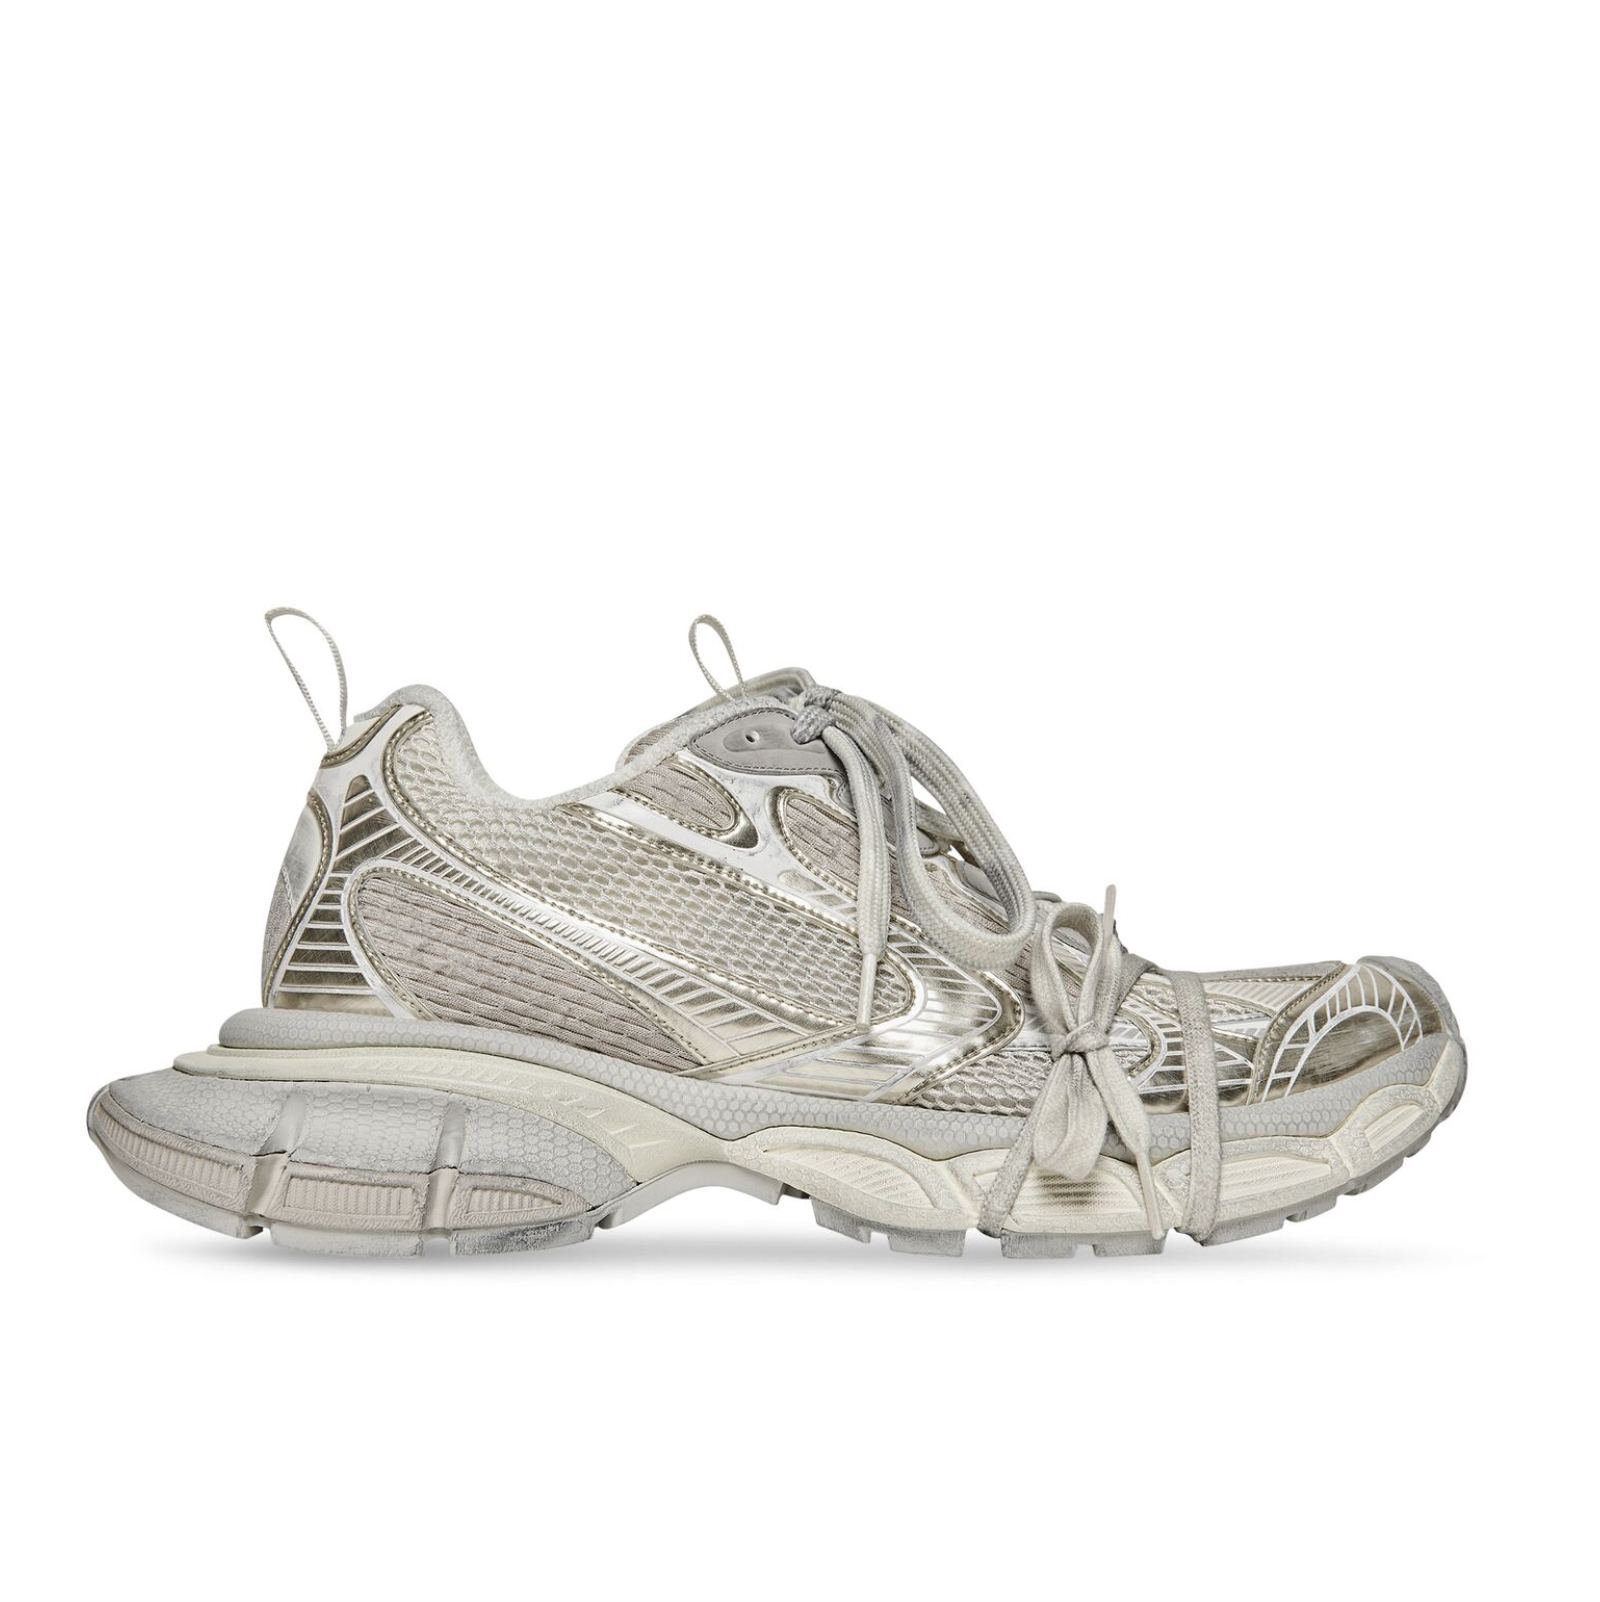 sund fornuft Feasibility Stærk vind Balenciaga 3XL Sneakers in off white colorway | Designer Sneakers –  RADPRESENT